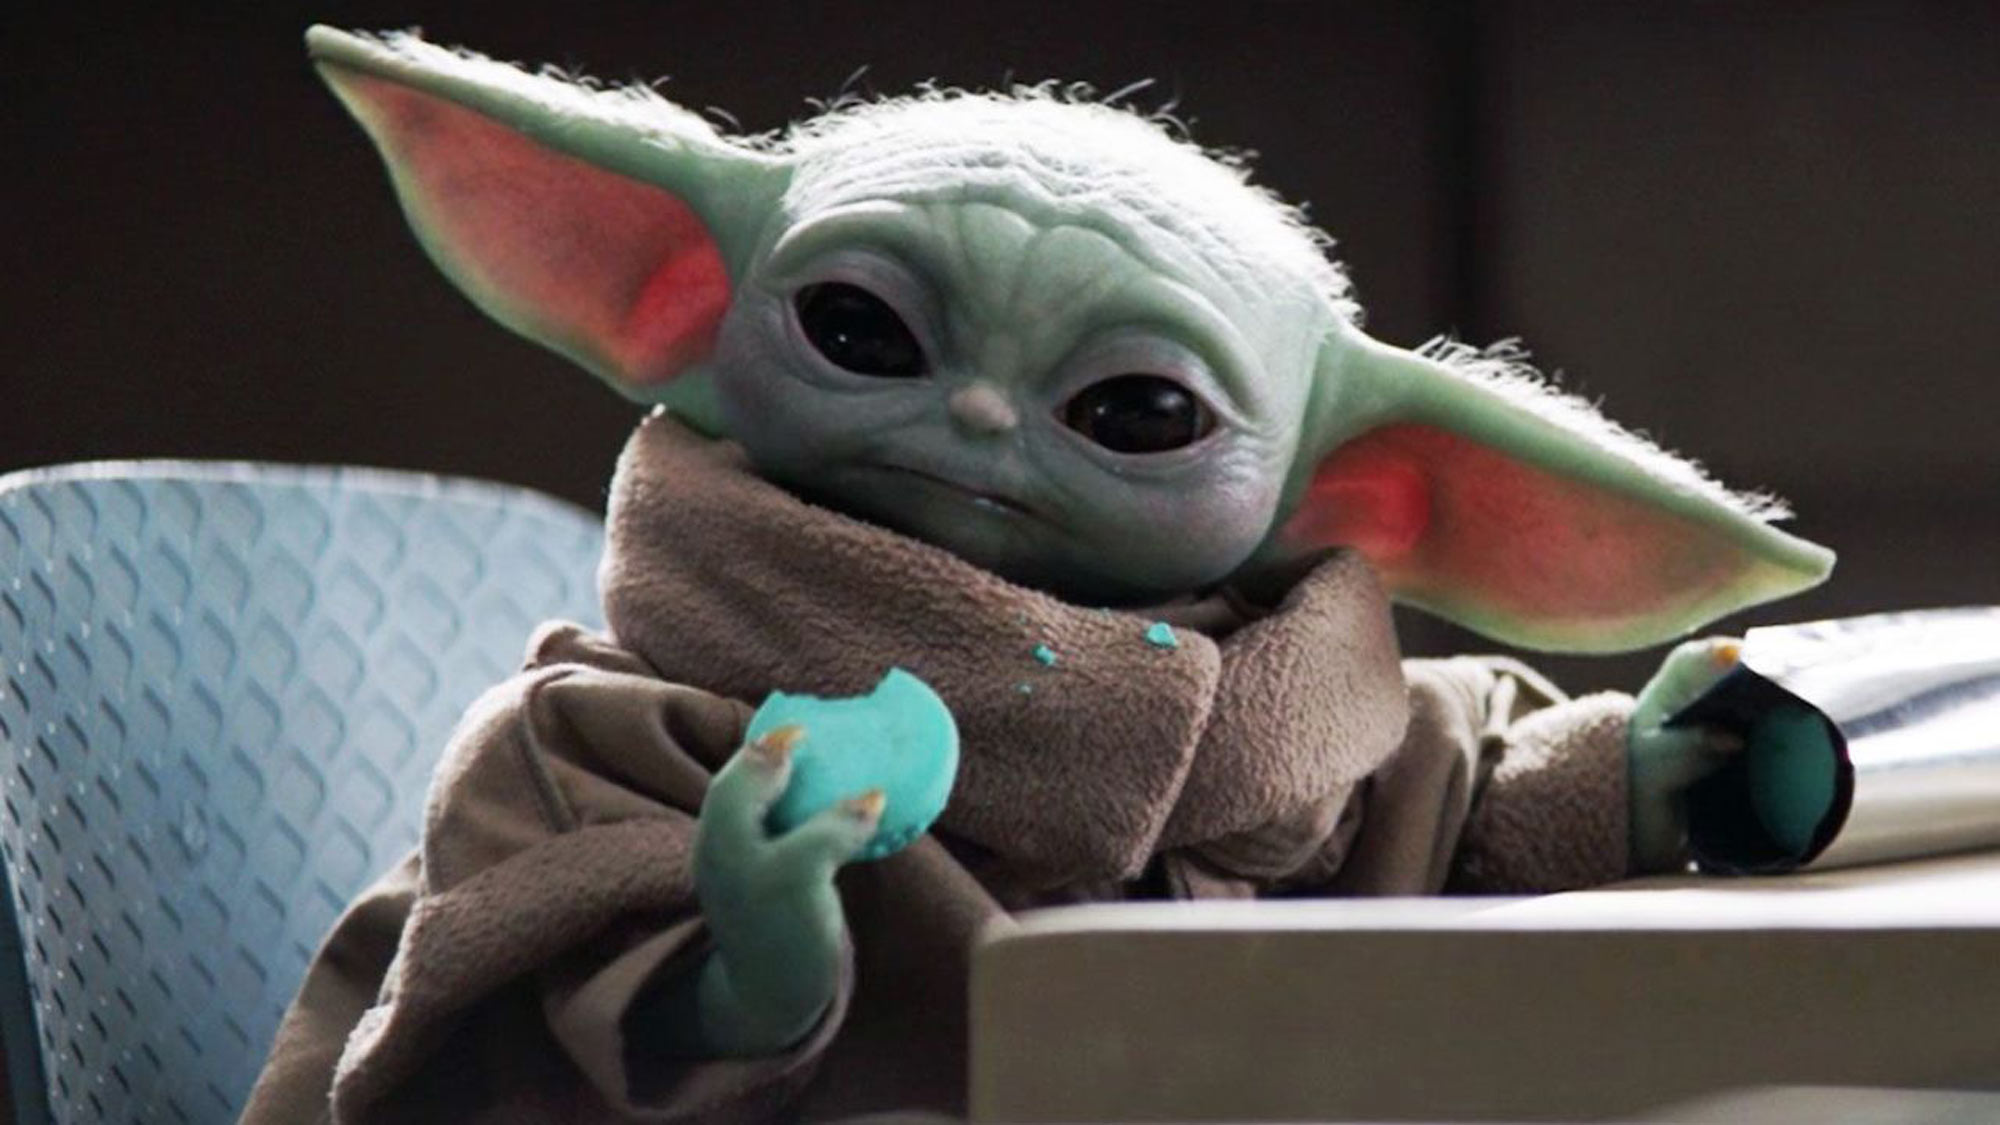 Grogu/Baby Yoda holding food in The Mandalorian